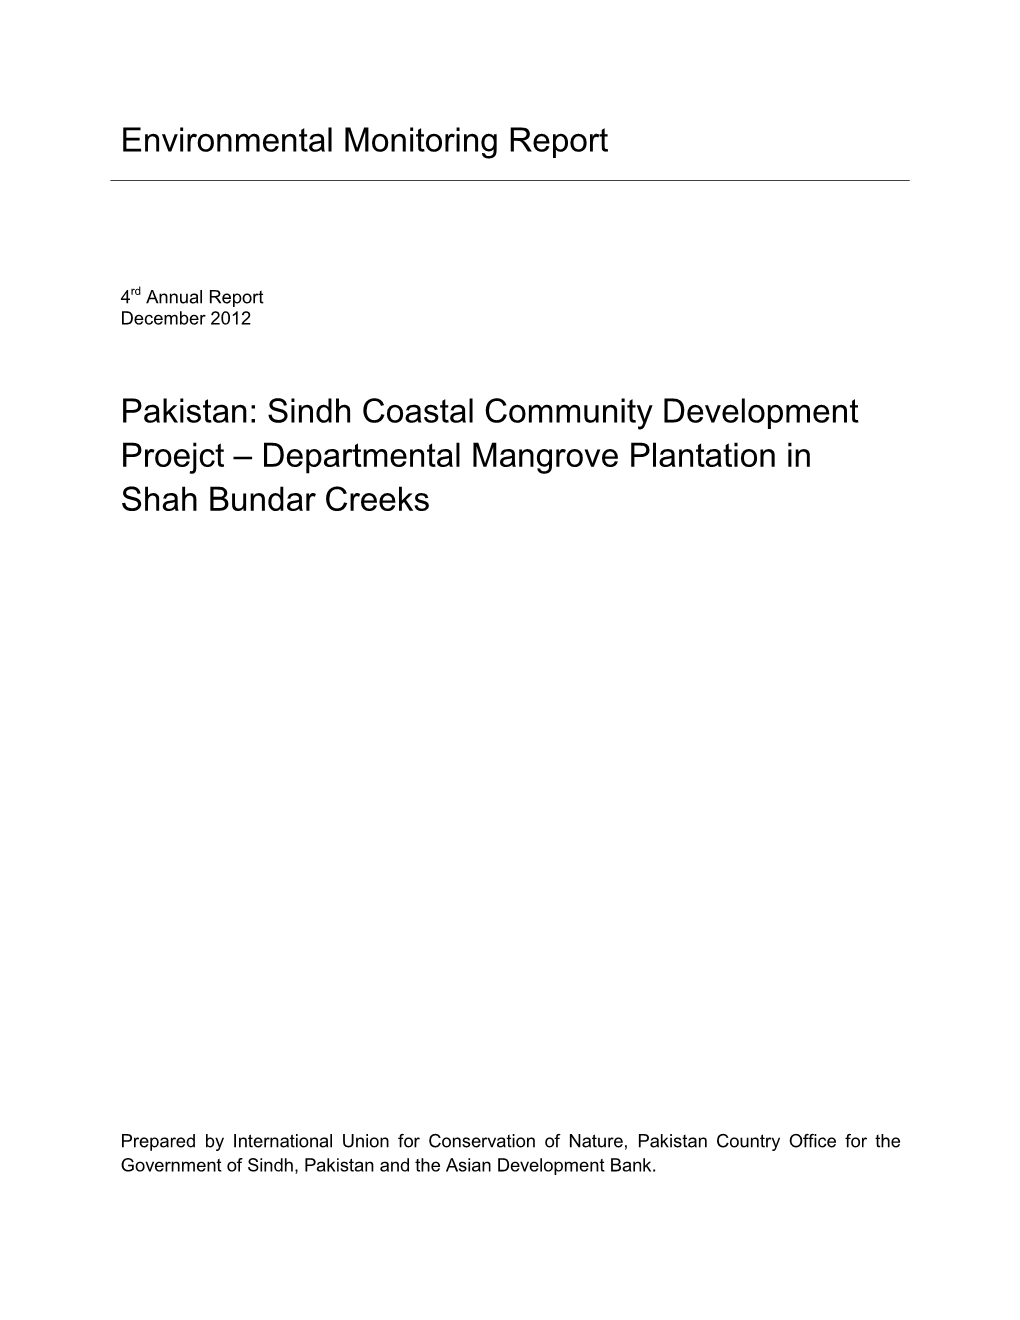 Environmental Monitoring Report Pakistan